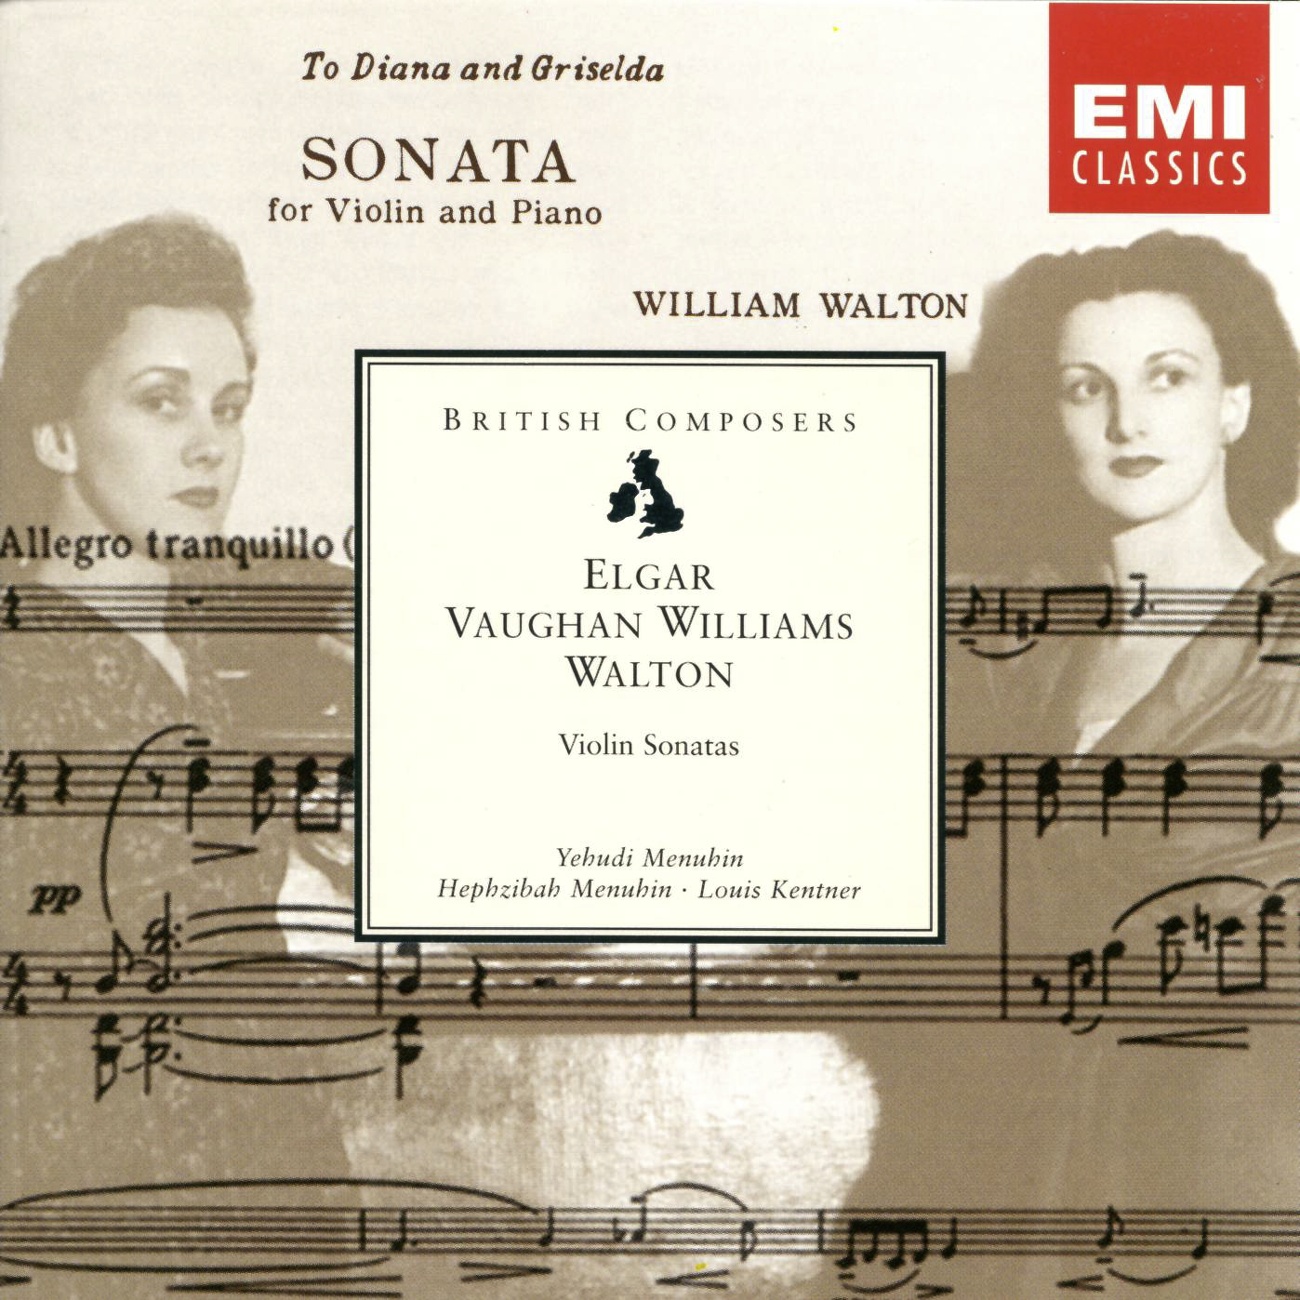 Variation I (Violin Sonata, Movement 2b)